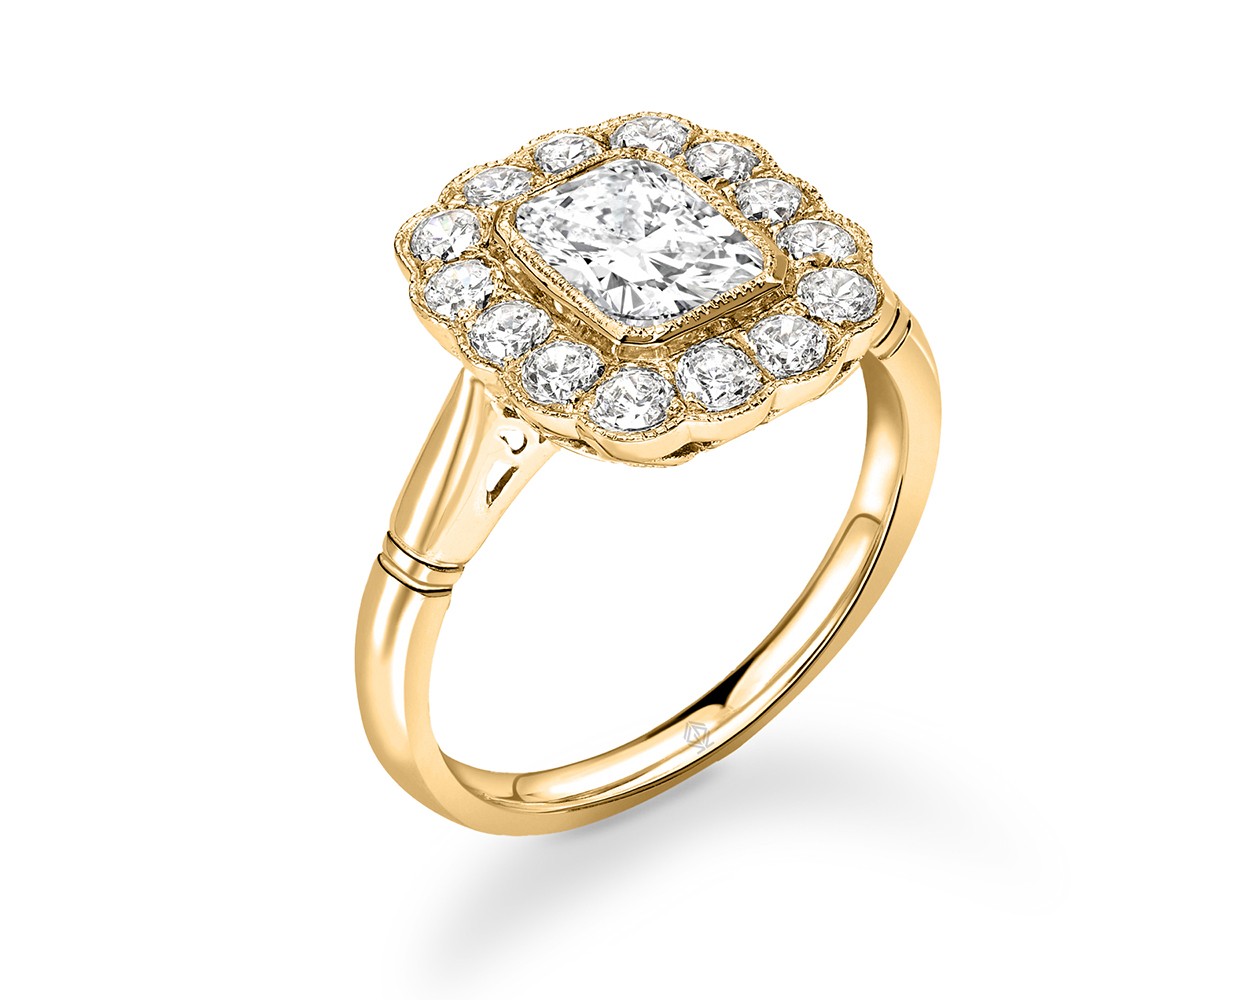 18K YELLOW GOLD VINTAGE MILGRAIN HALO EMERALD CUT DIAMOND RING